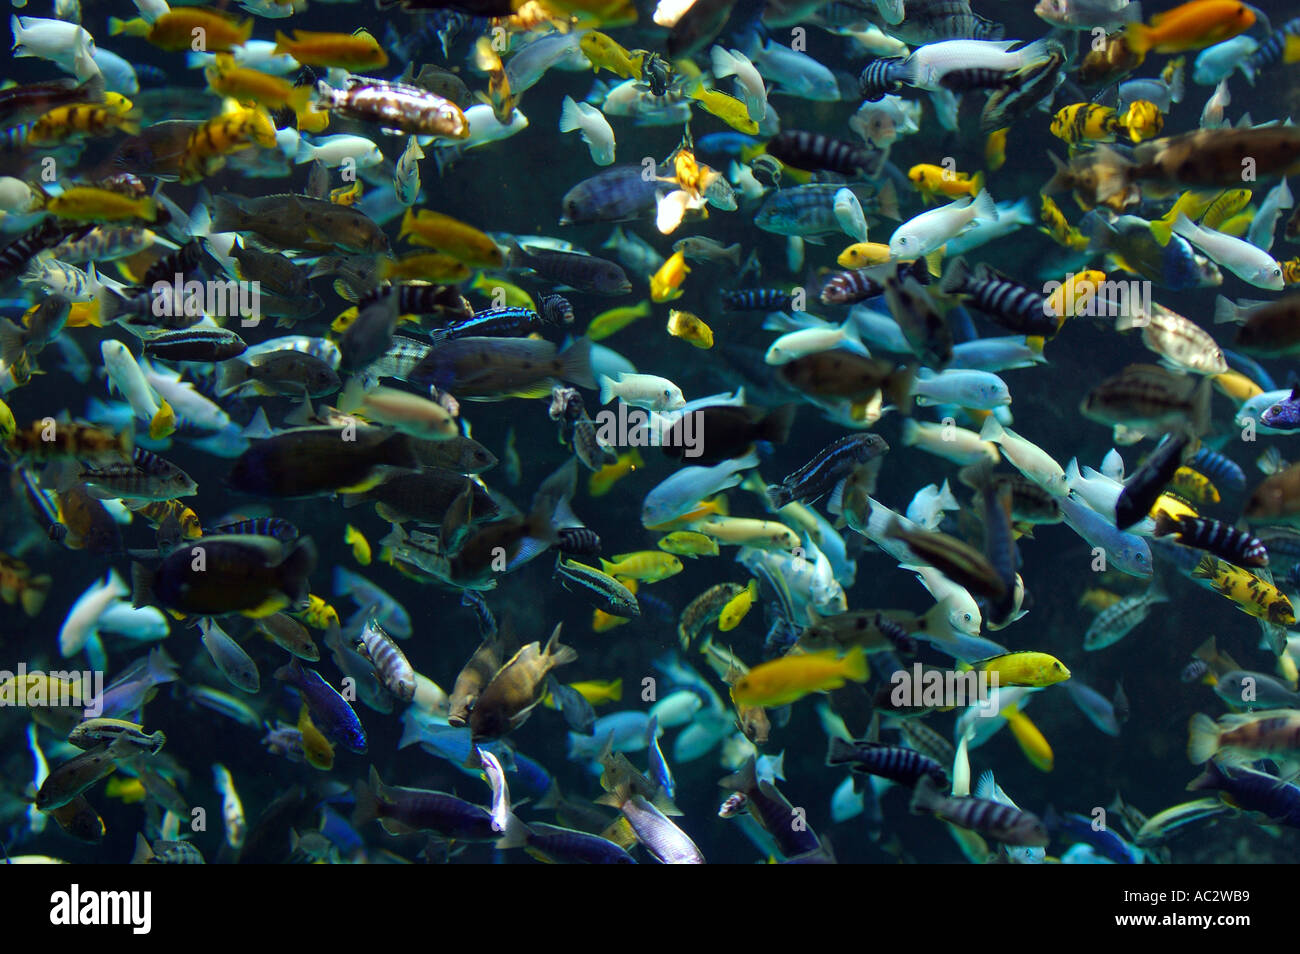 School of multcolored fish viewed underwater Aquarium Toronto zoo Stock Photo